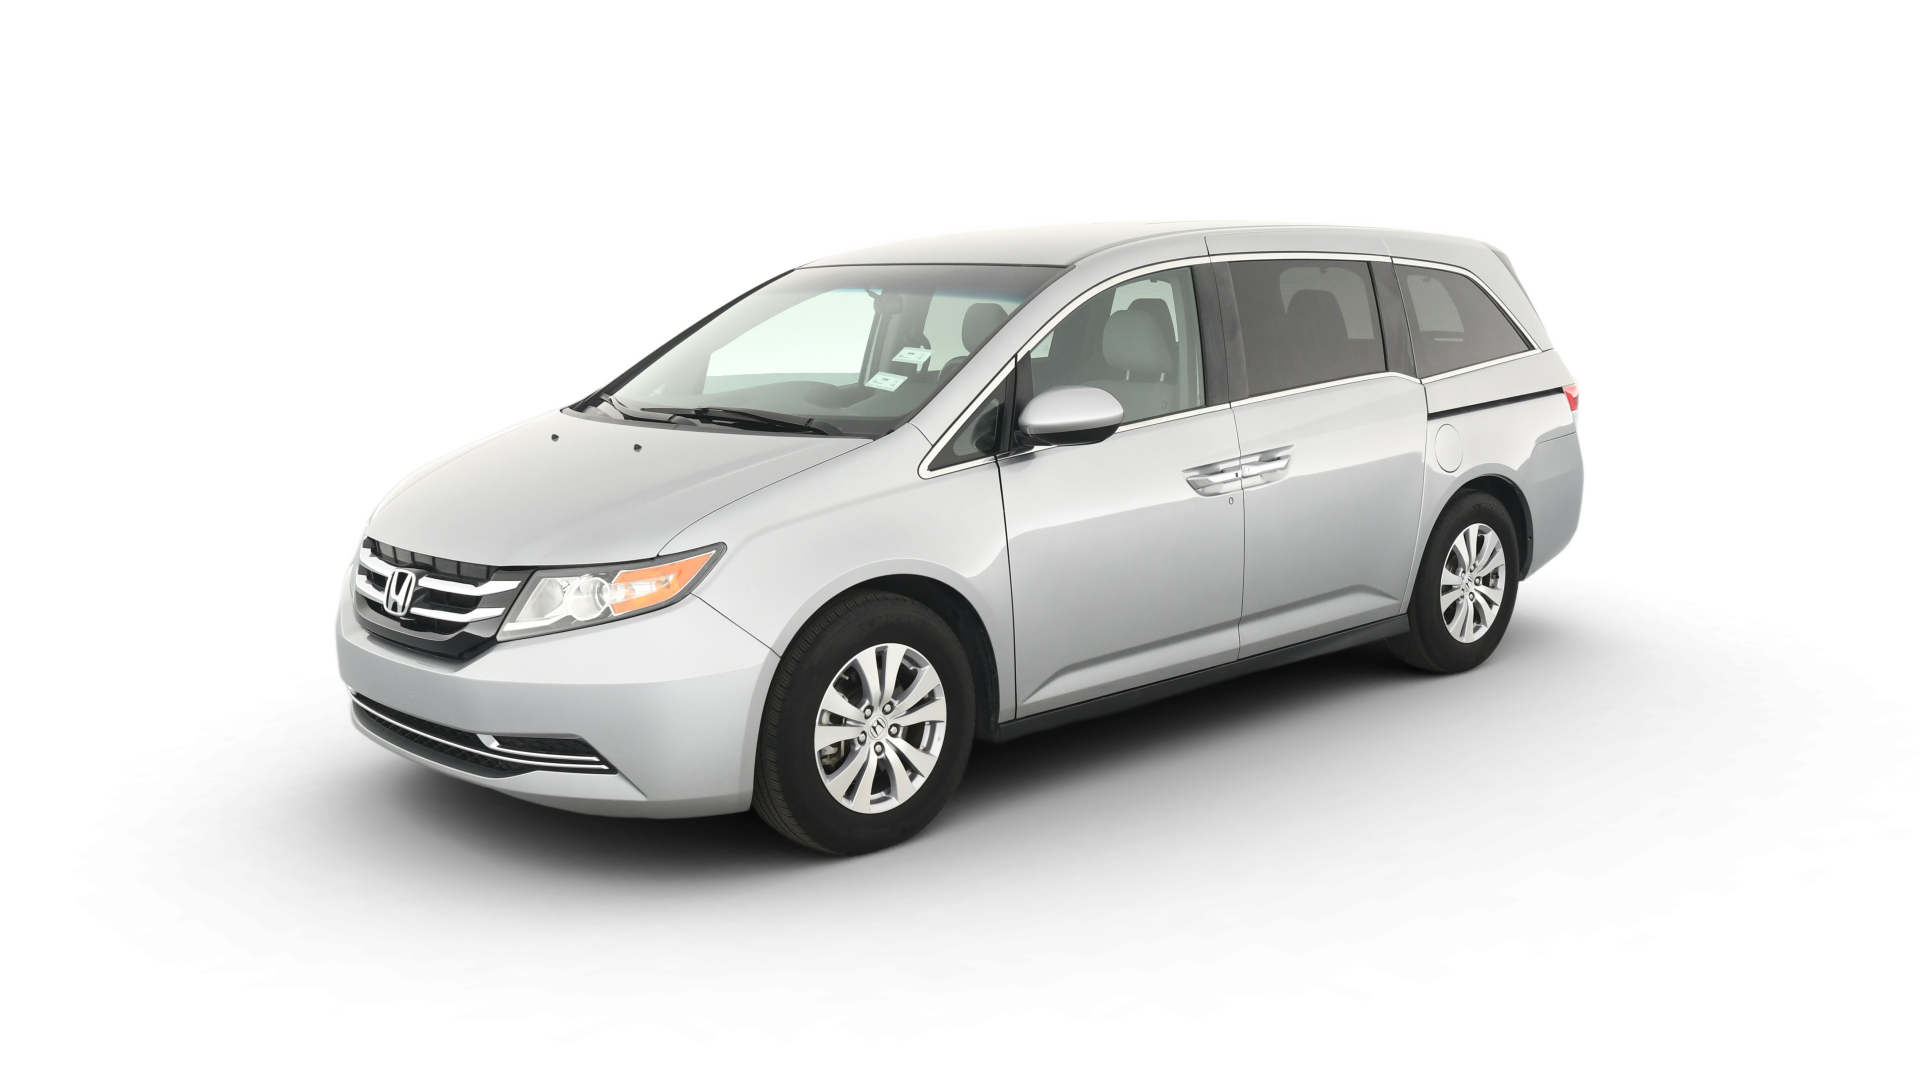 Used 2016 Honda Odyssey For Sale Online | Carvana